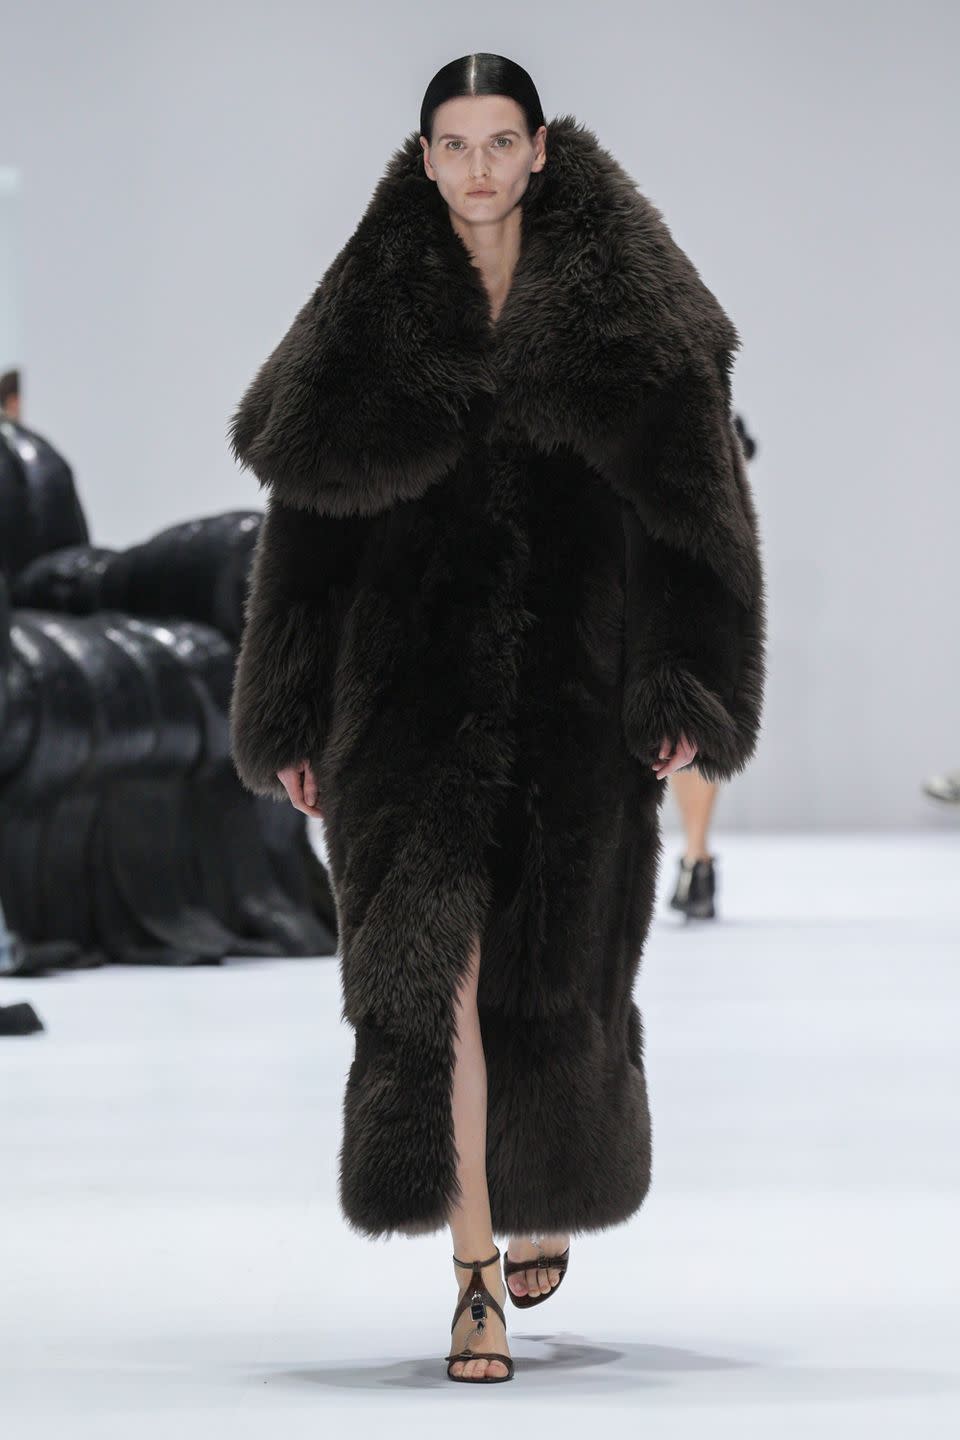 a person wearing a black fur coat